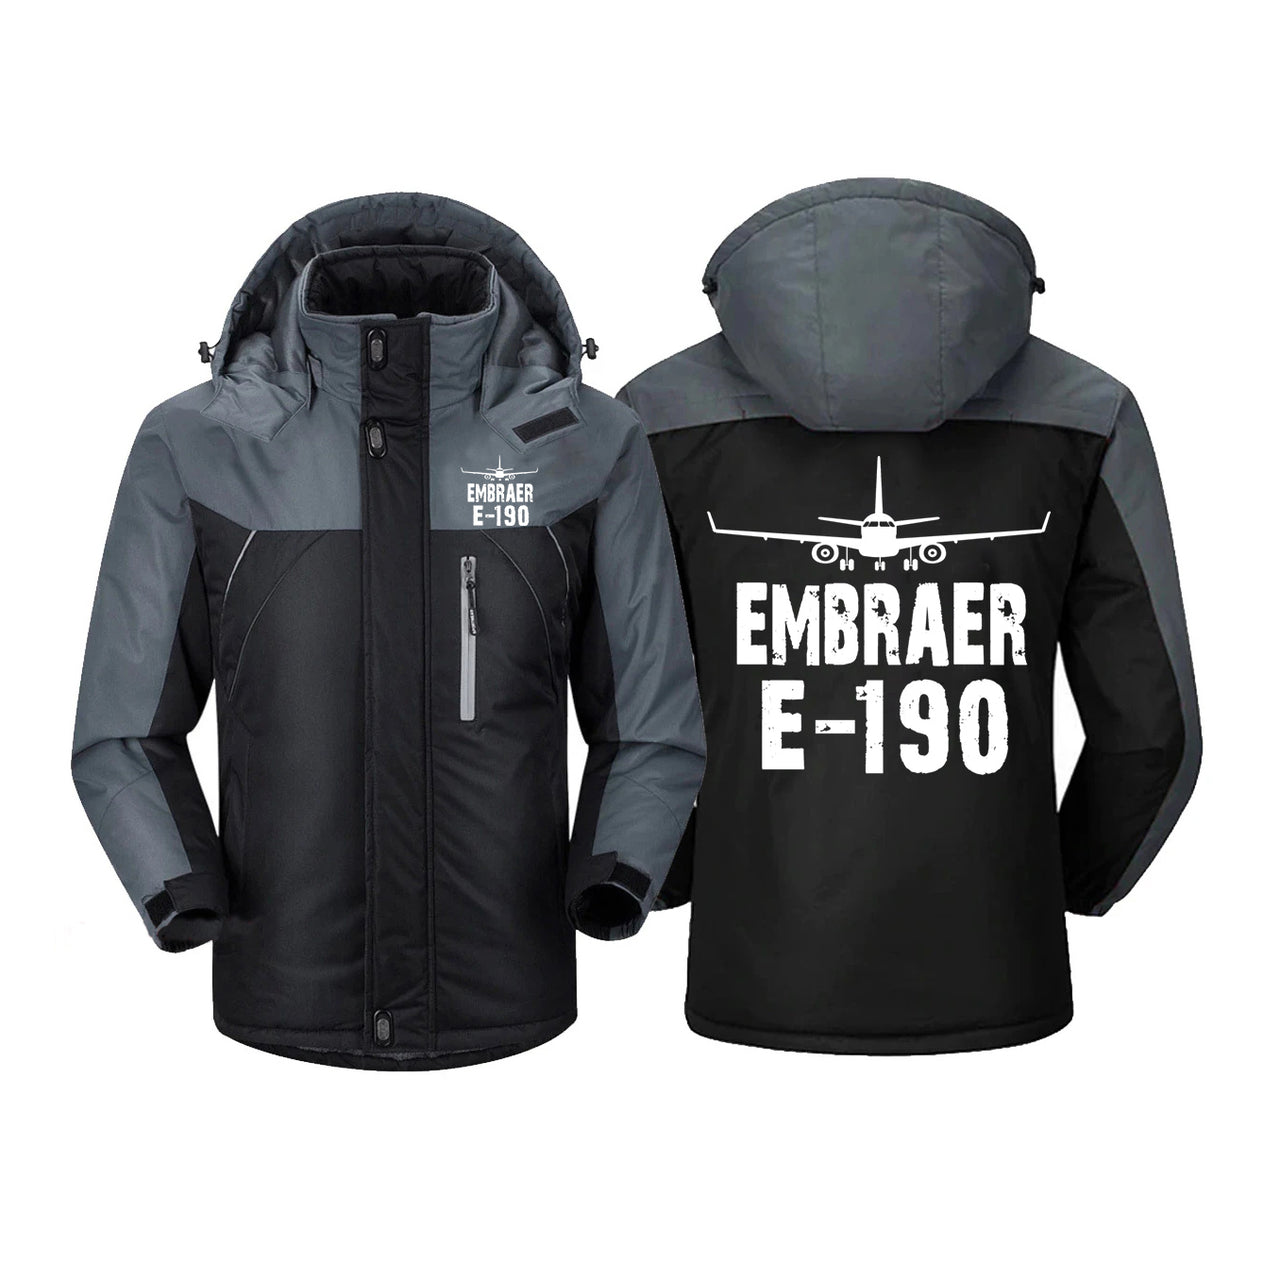 Embraer E-190 & Plane Designed Thick Winter Jackets